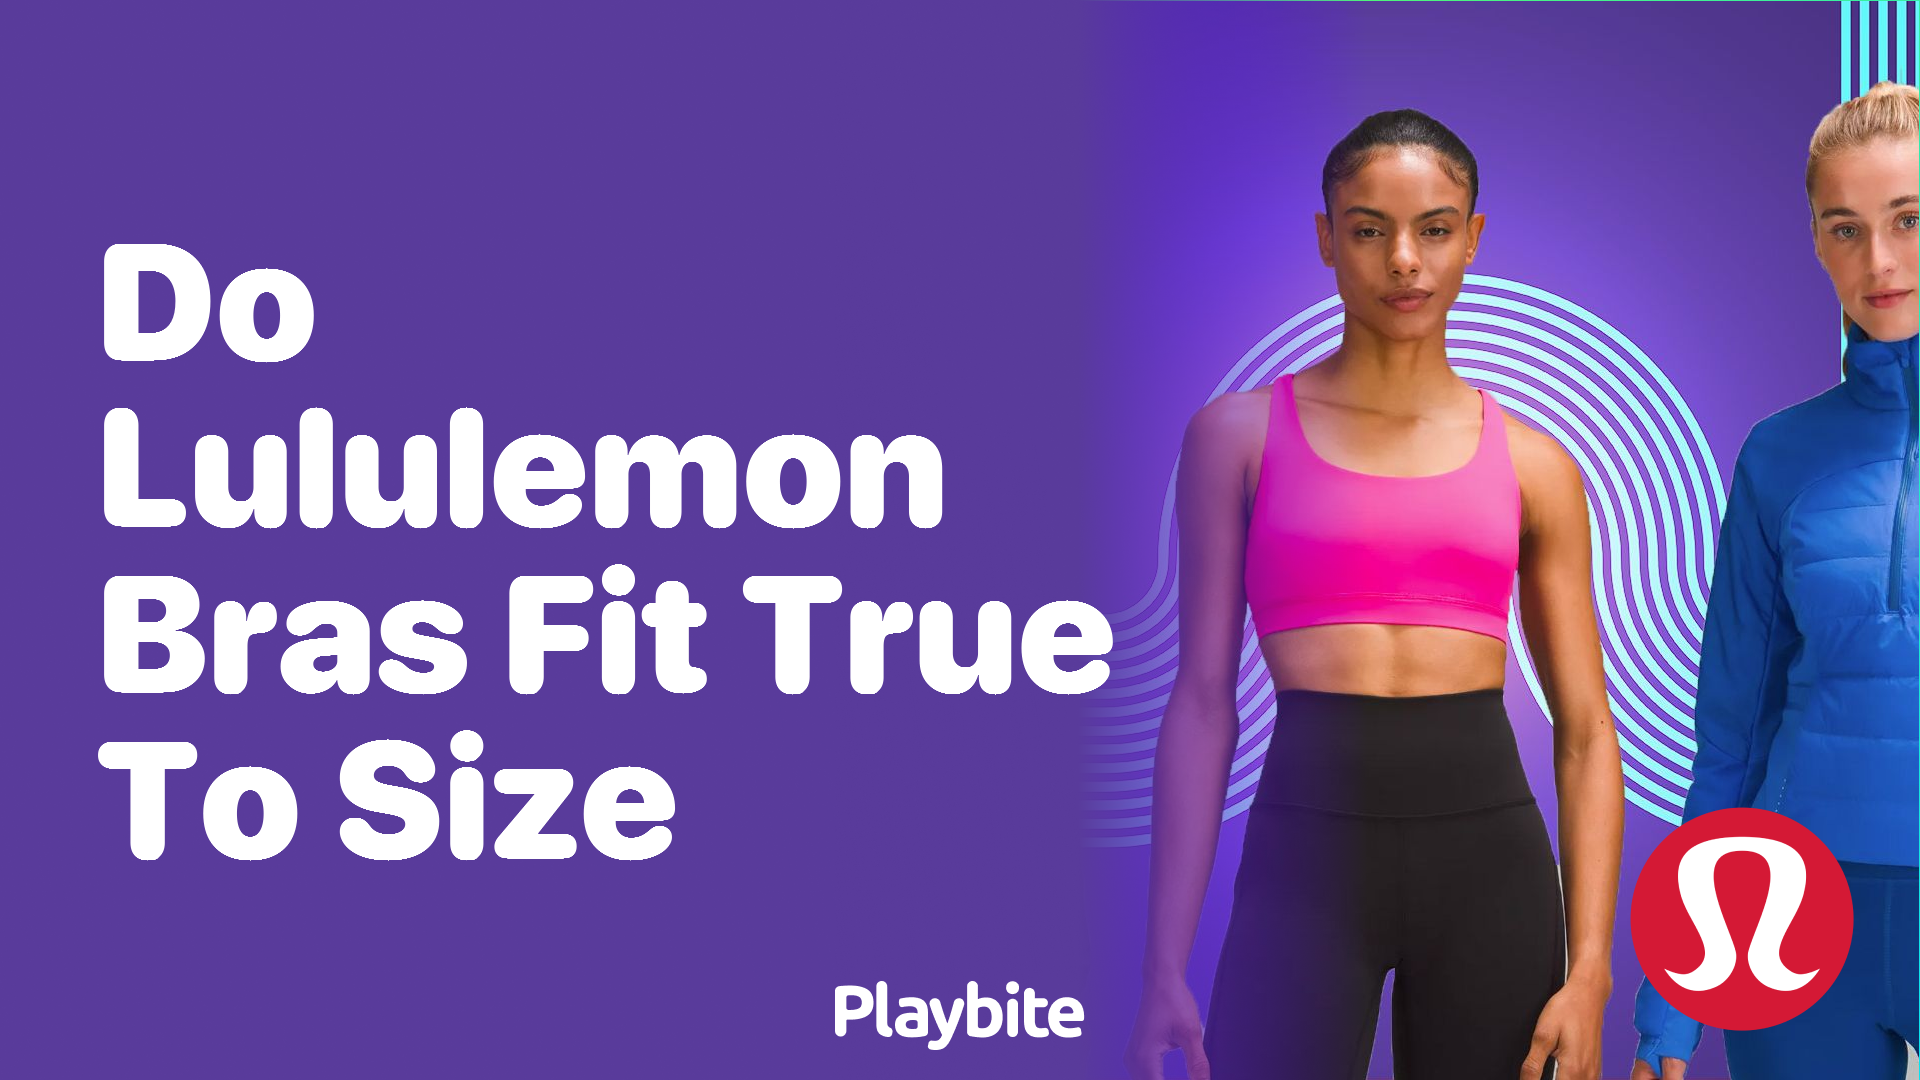 Do Lululemon Bras Fit True to Size? - Playbite